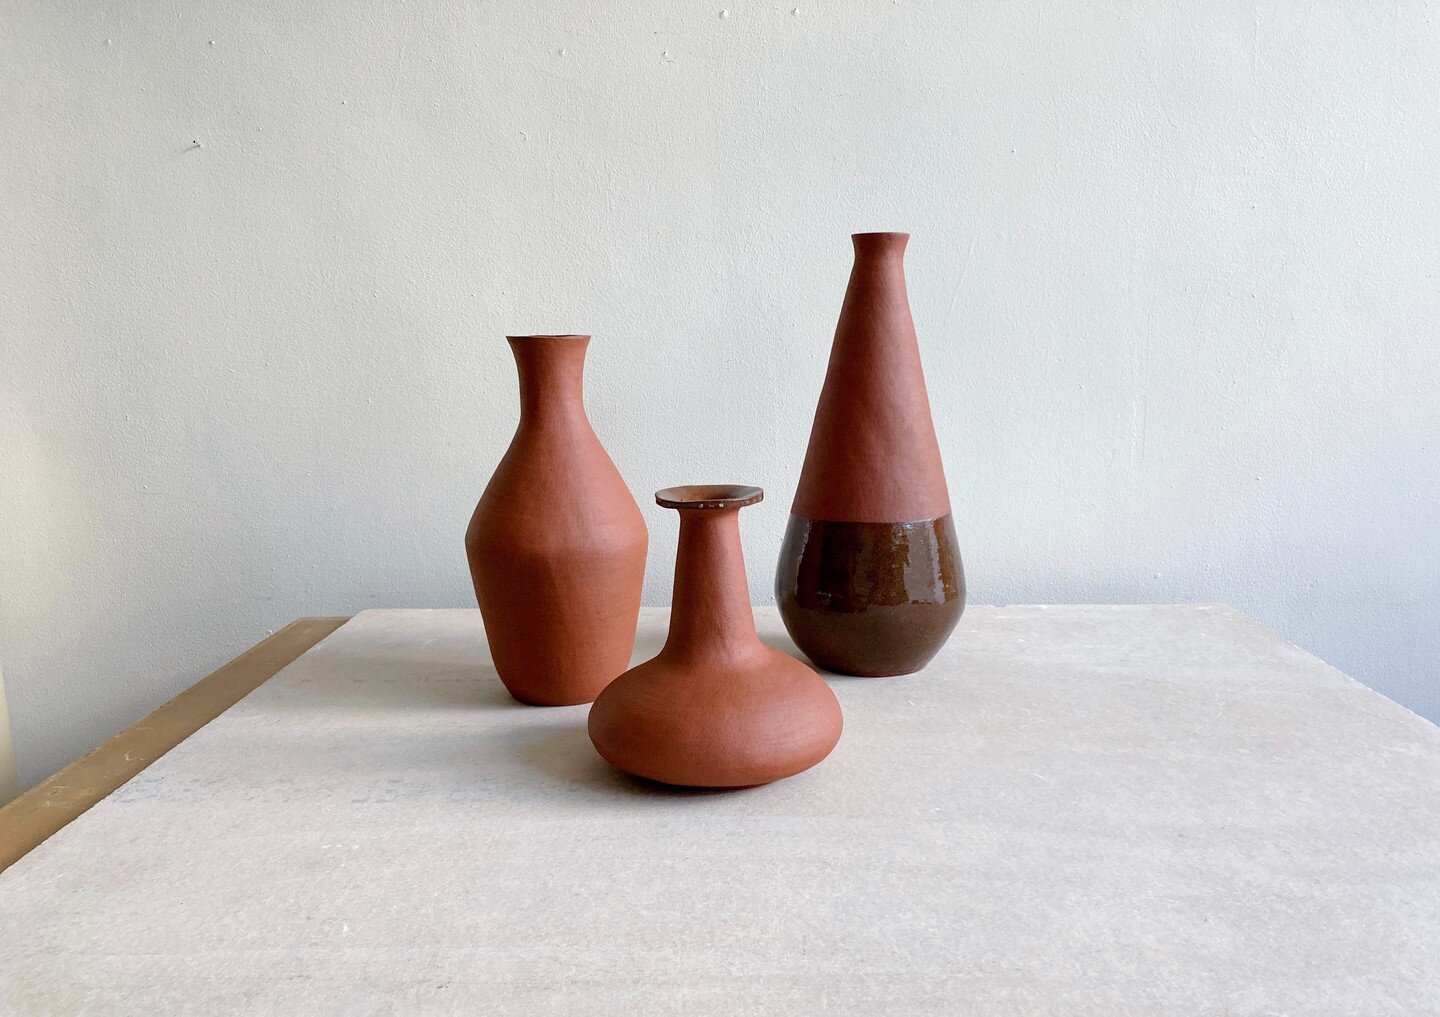 new forms, new month 8.1.22
.
.
. 
#sculptureforyoureveryday #carnevale365 #stoneware #vessel #coilbuilt #ceramic #ceramics #sculpture #chicago #design #interiordesign #vase